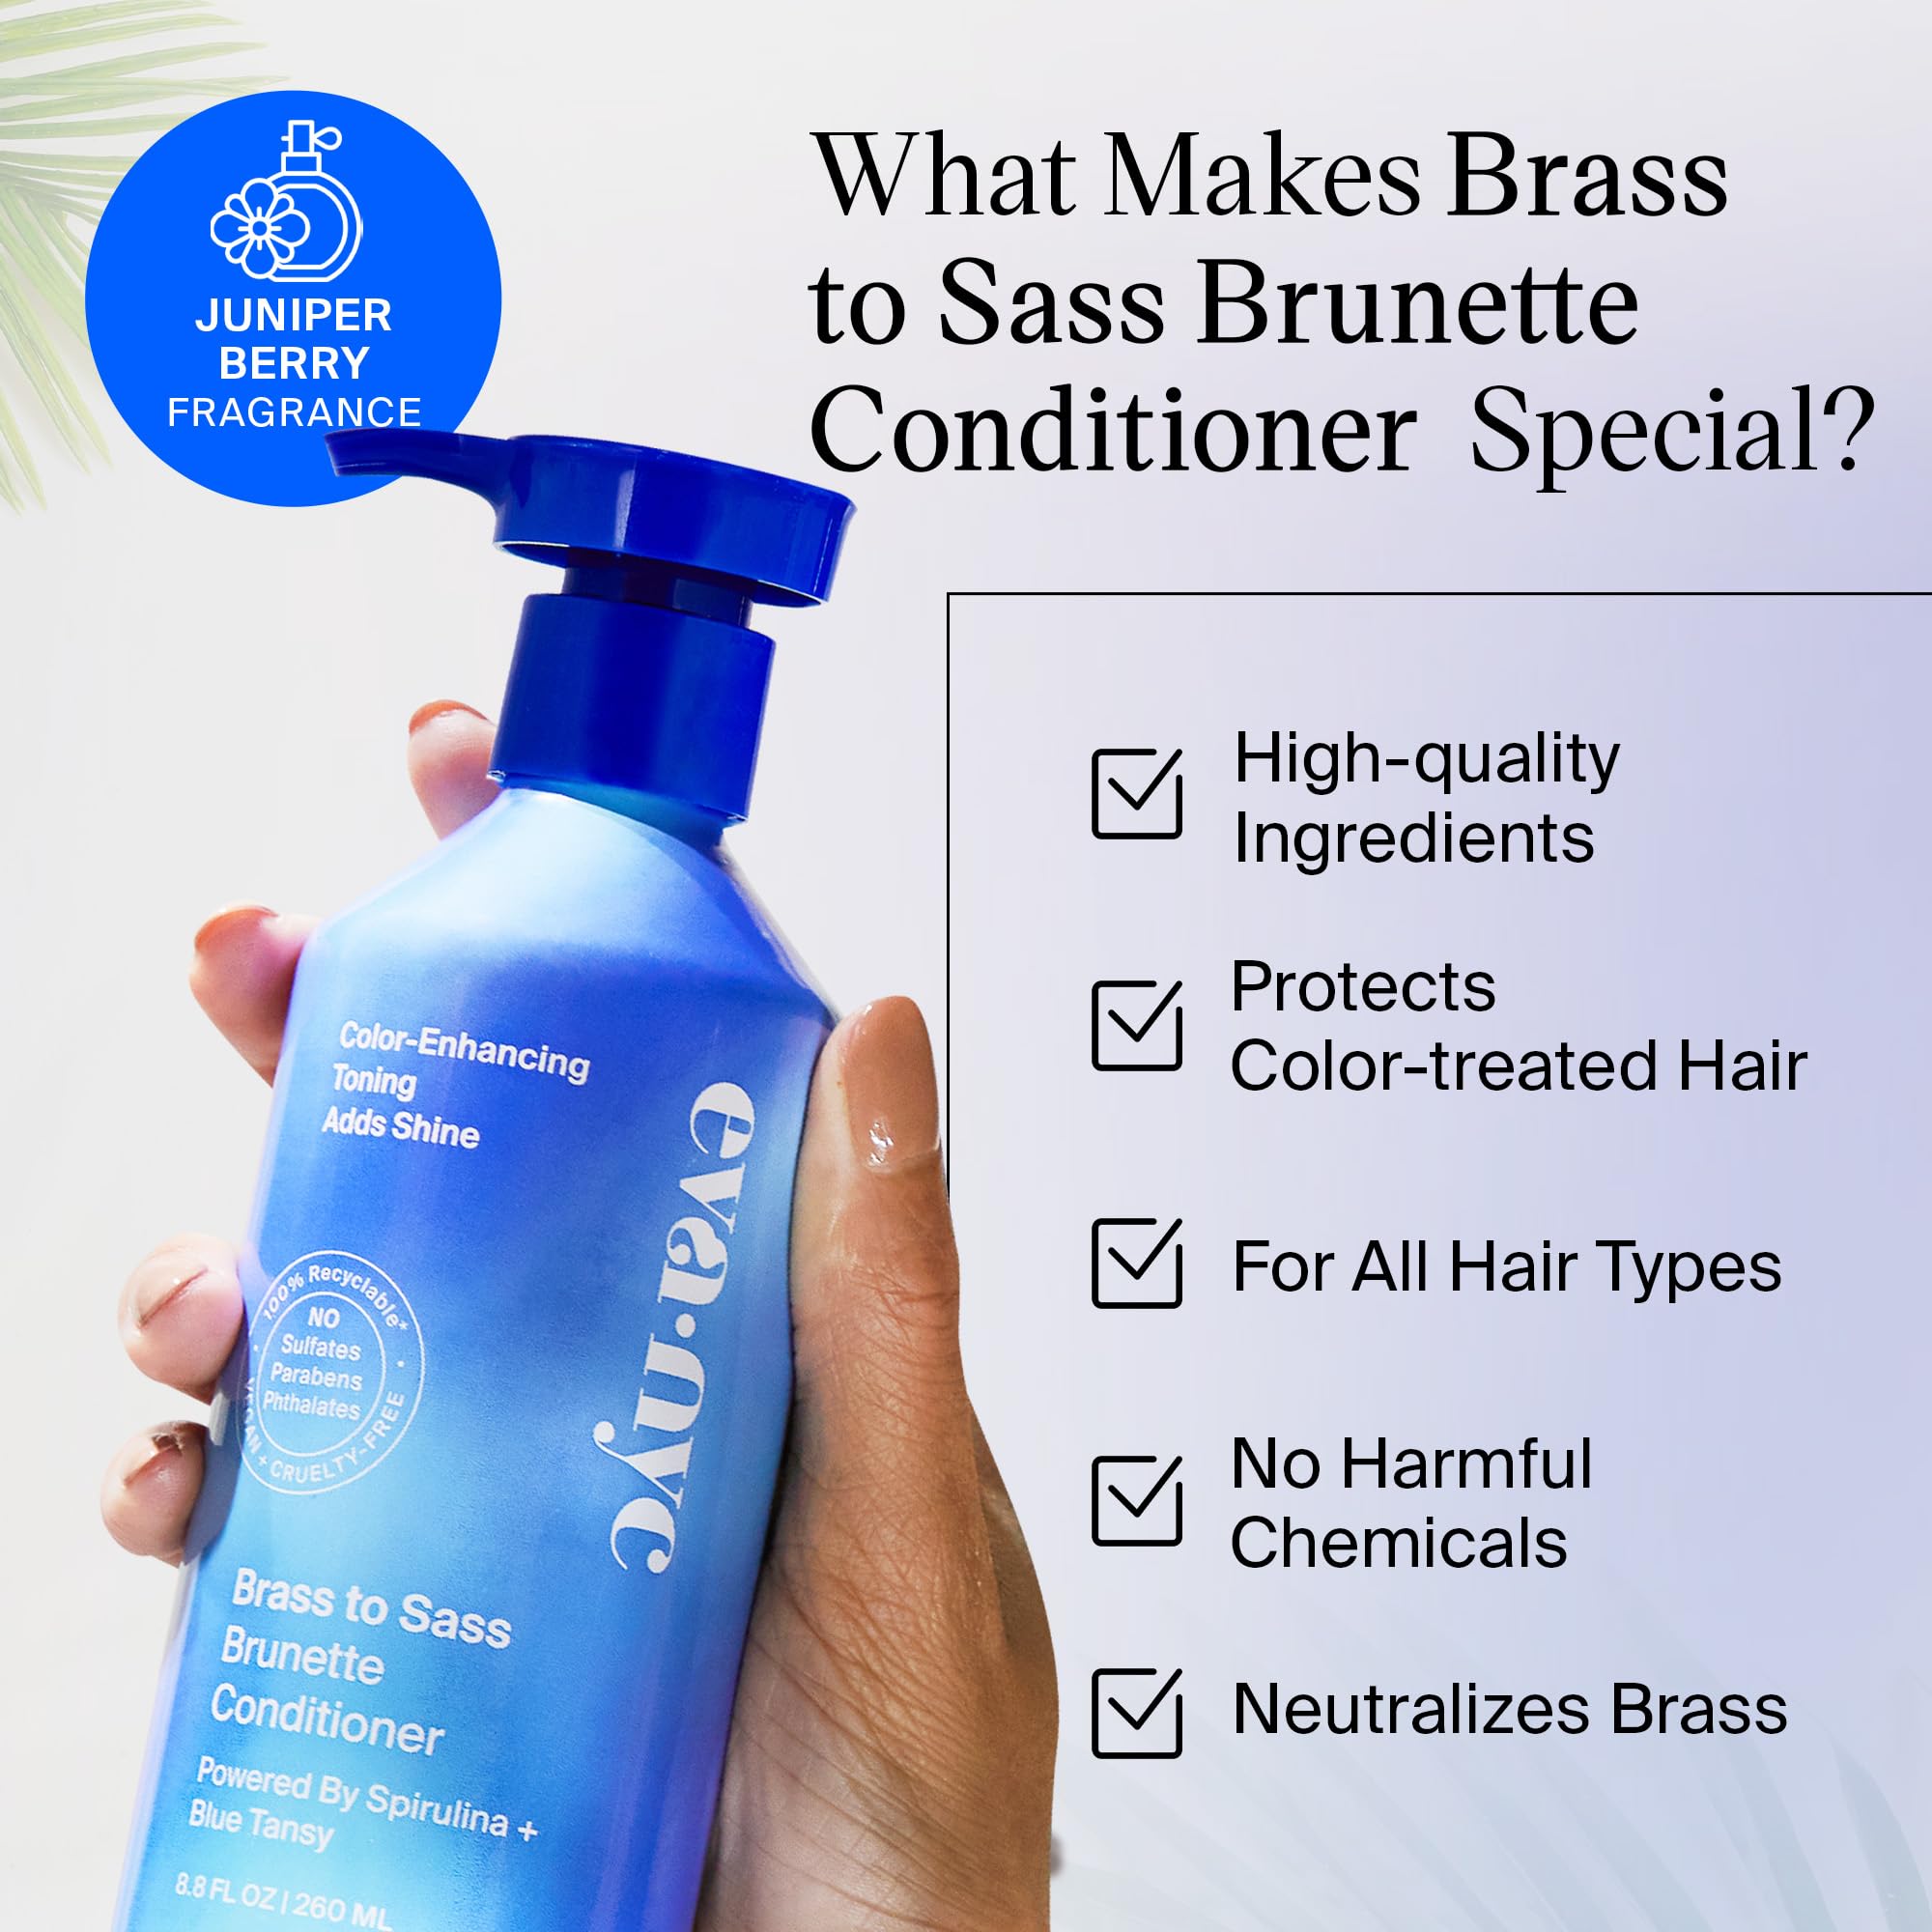 Eva NYC Brass to Sass Brunette Conditioner, Blue Conditioner for Brassy Hair, Neutralizes Brassy Red and Orange Tones, 8.8 fl oz